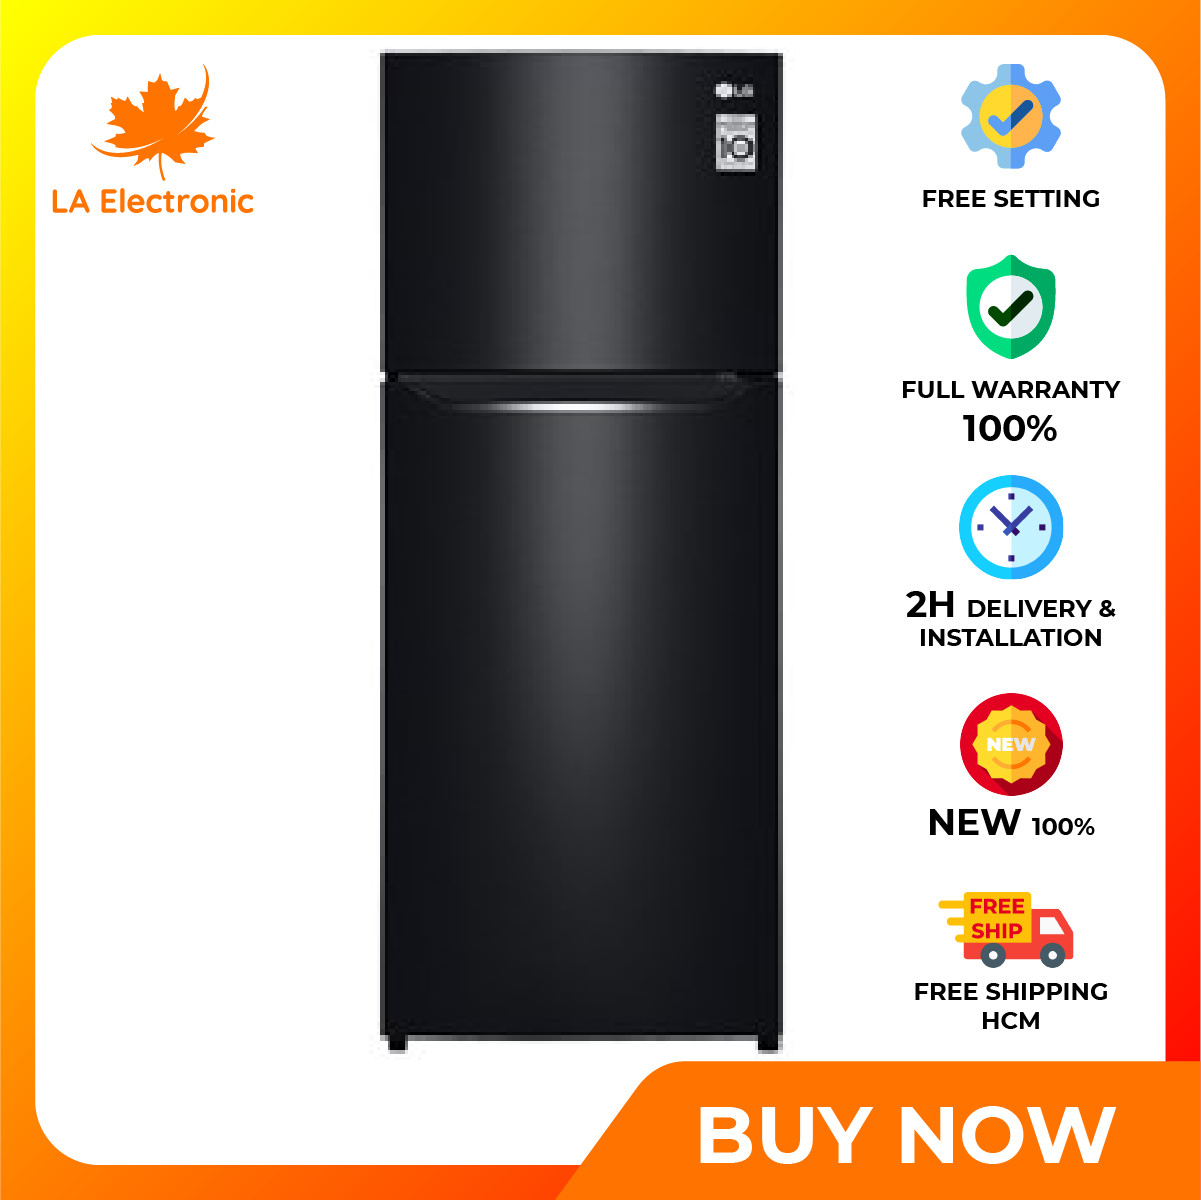 [Trả góp 0%] – LG Inverter 187 liter refrigerator GN-L205WB Full VAT – Free shipping HCM